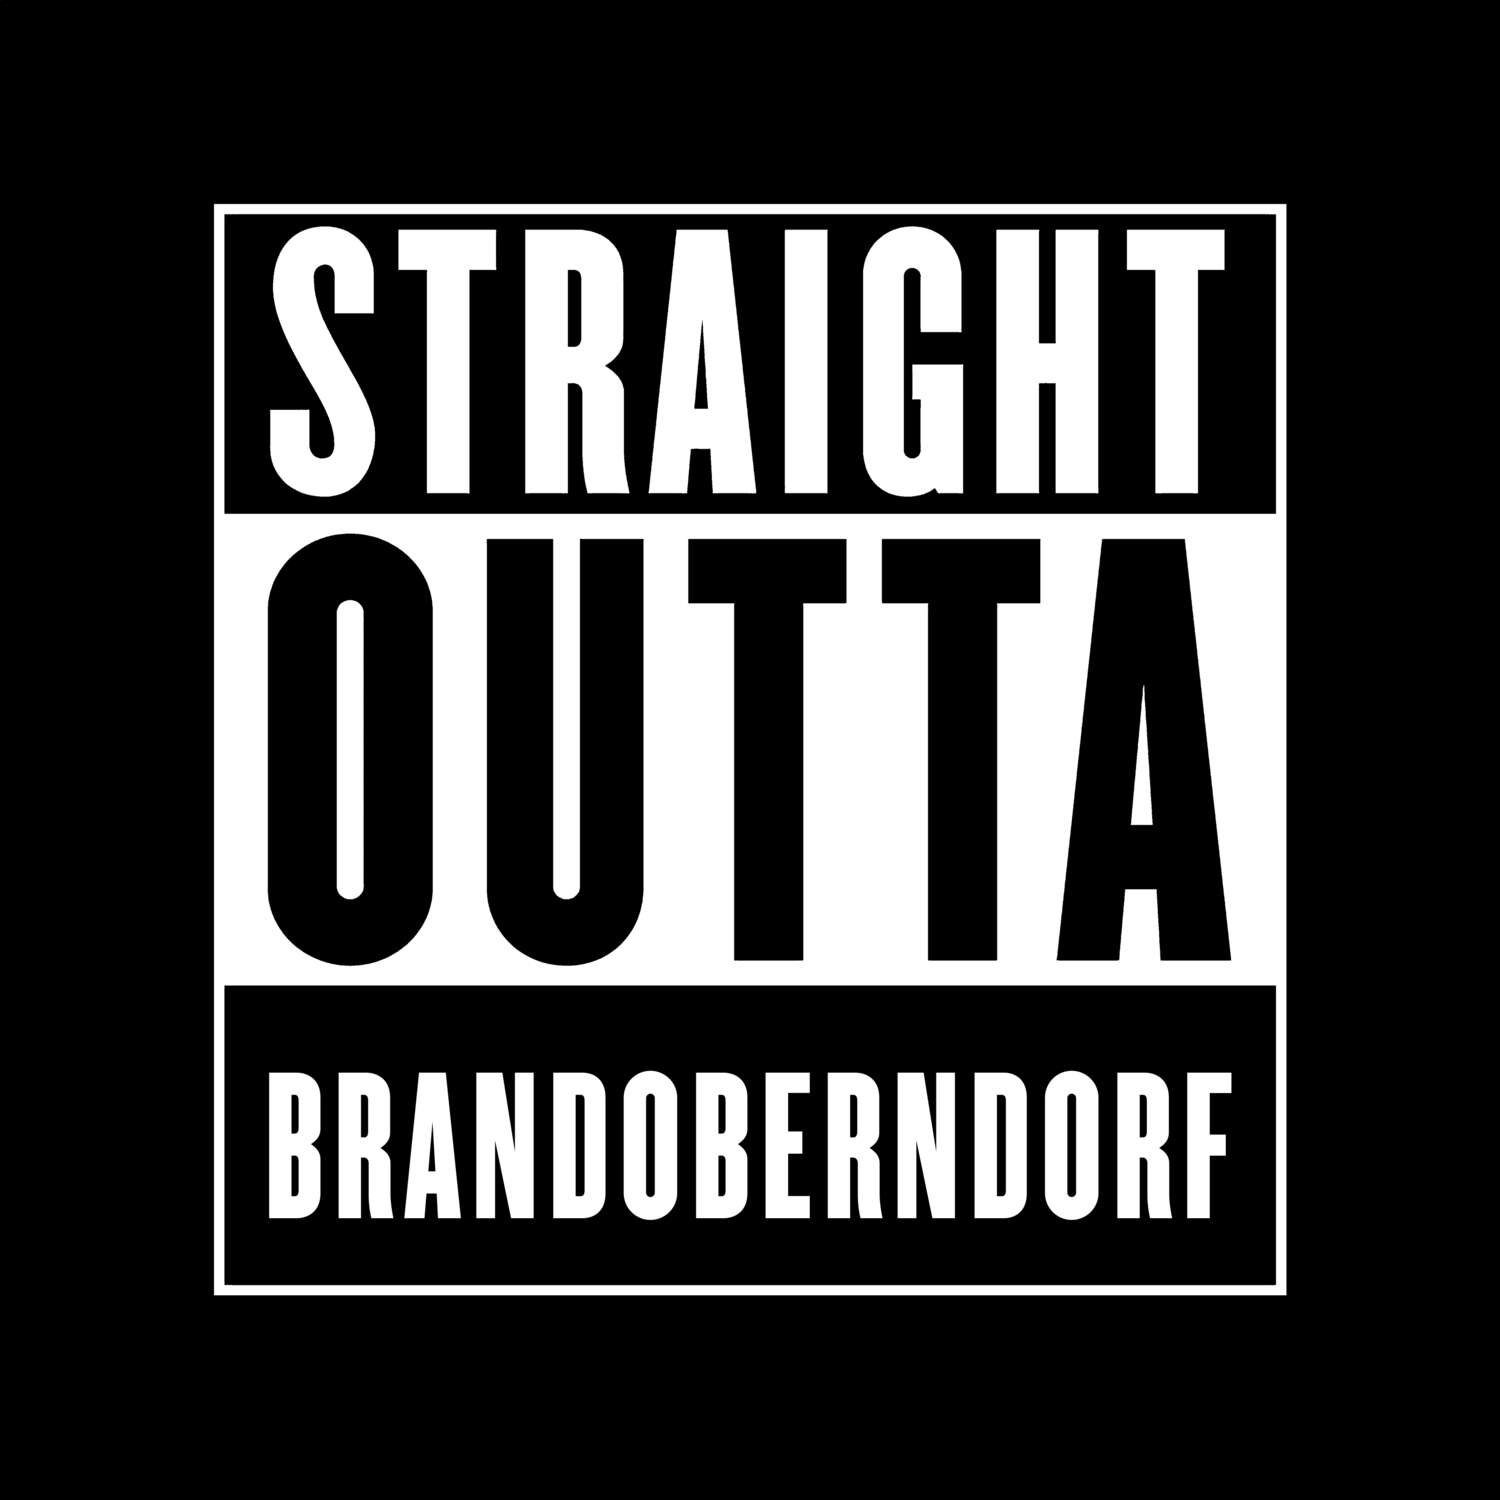 Brandoberndorf T-Shirt »Straight Outta«